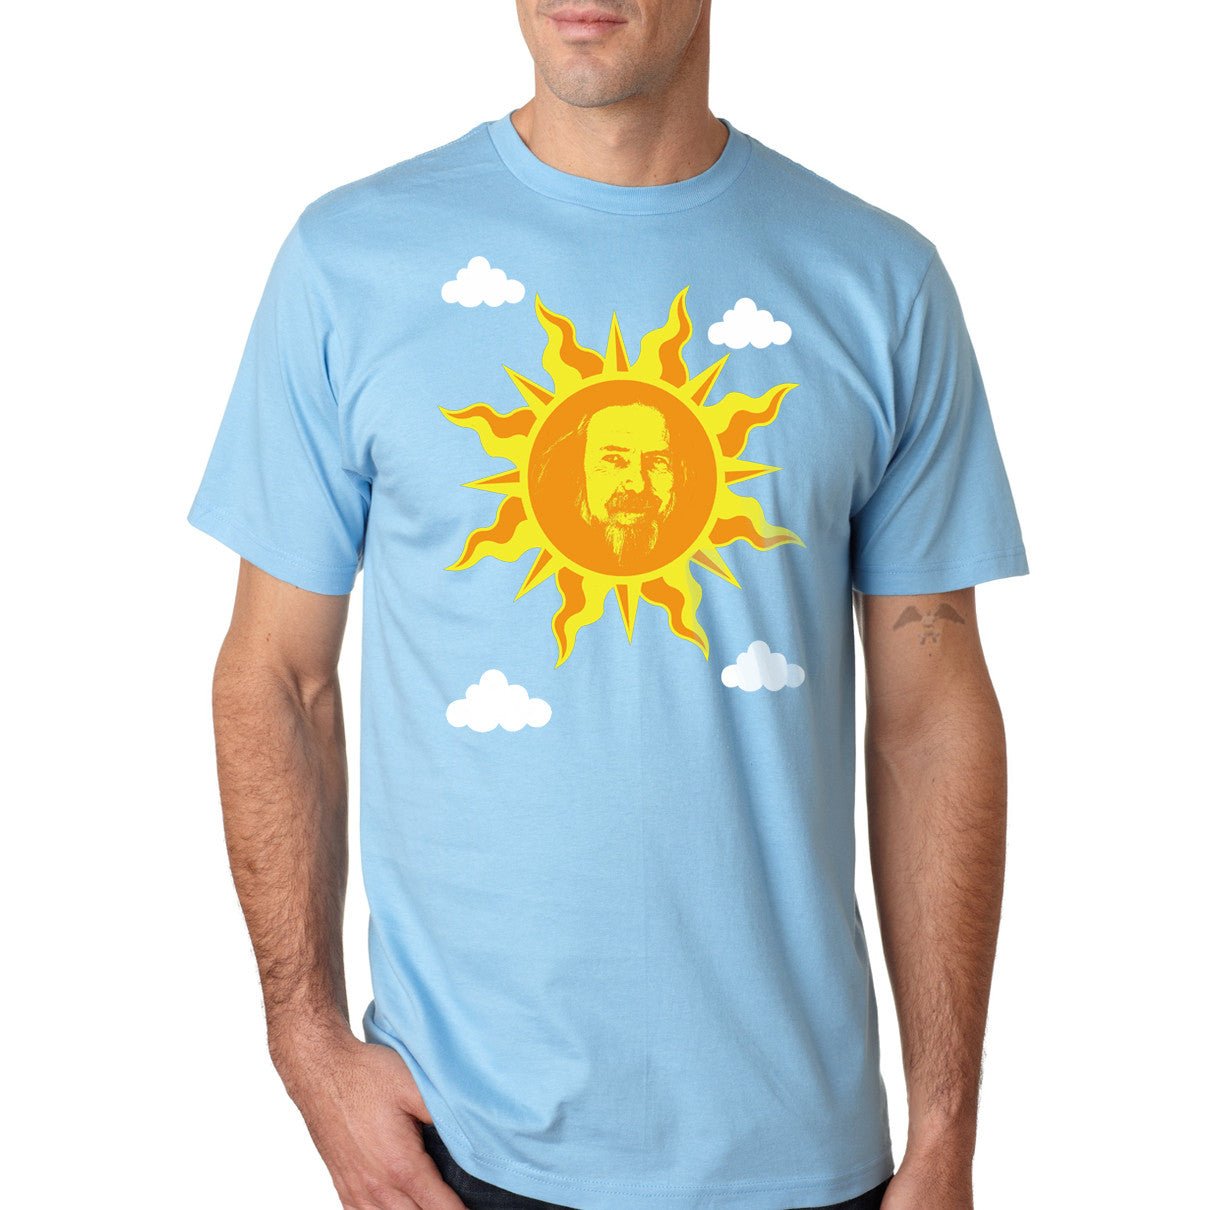 Alan Watts T-shirt sunshine design by Jared swart